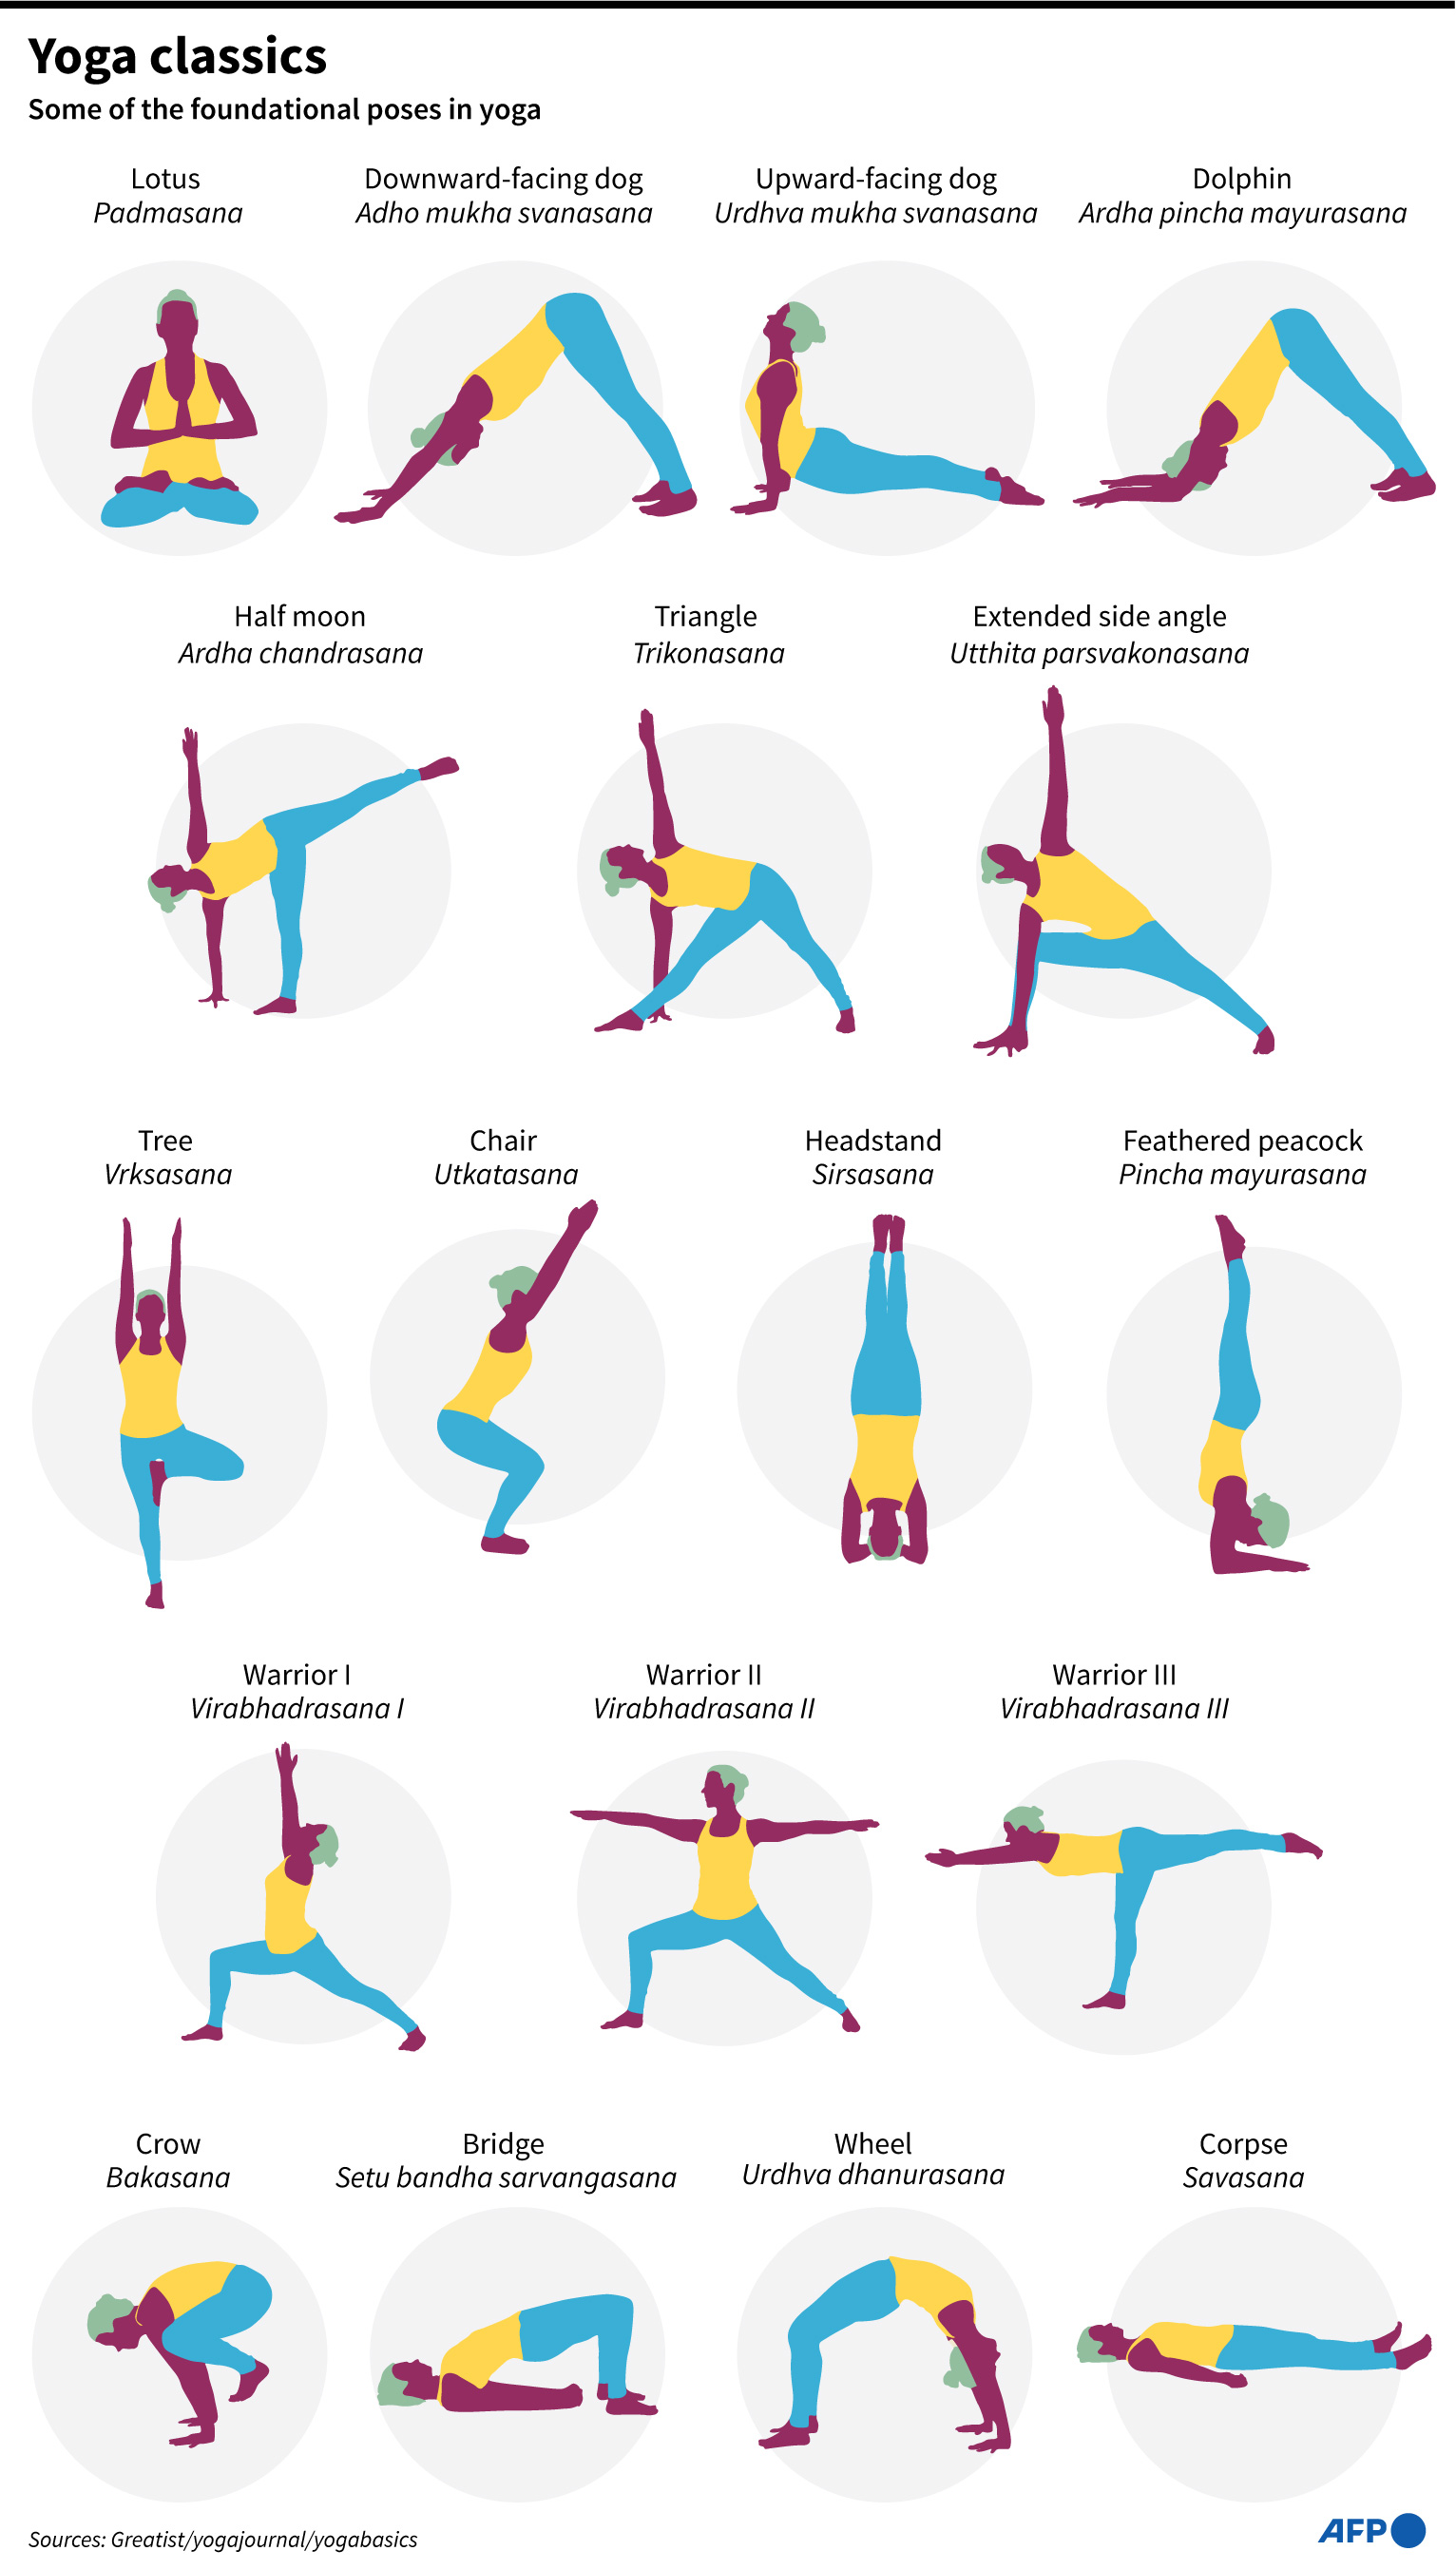 AFP News Agency on X: Yoga classics. #AFPGraphics presents some